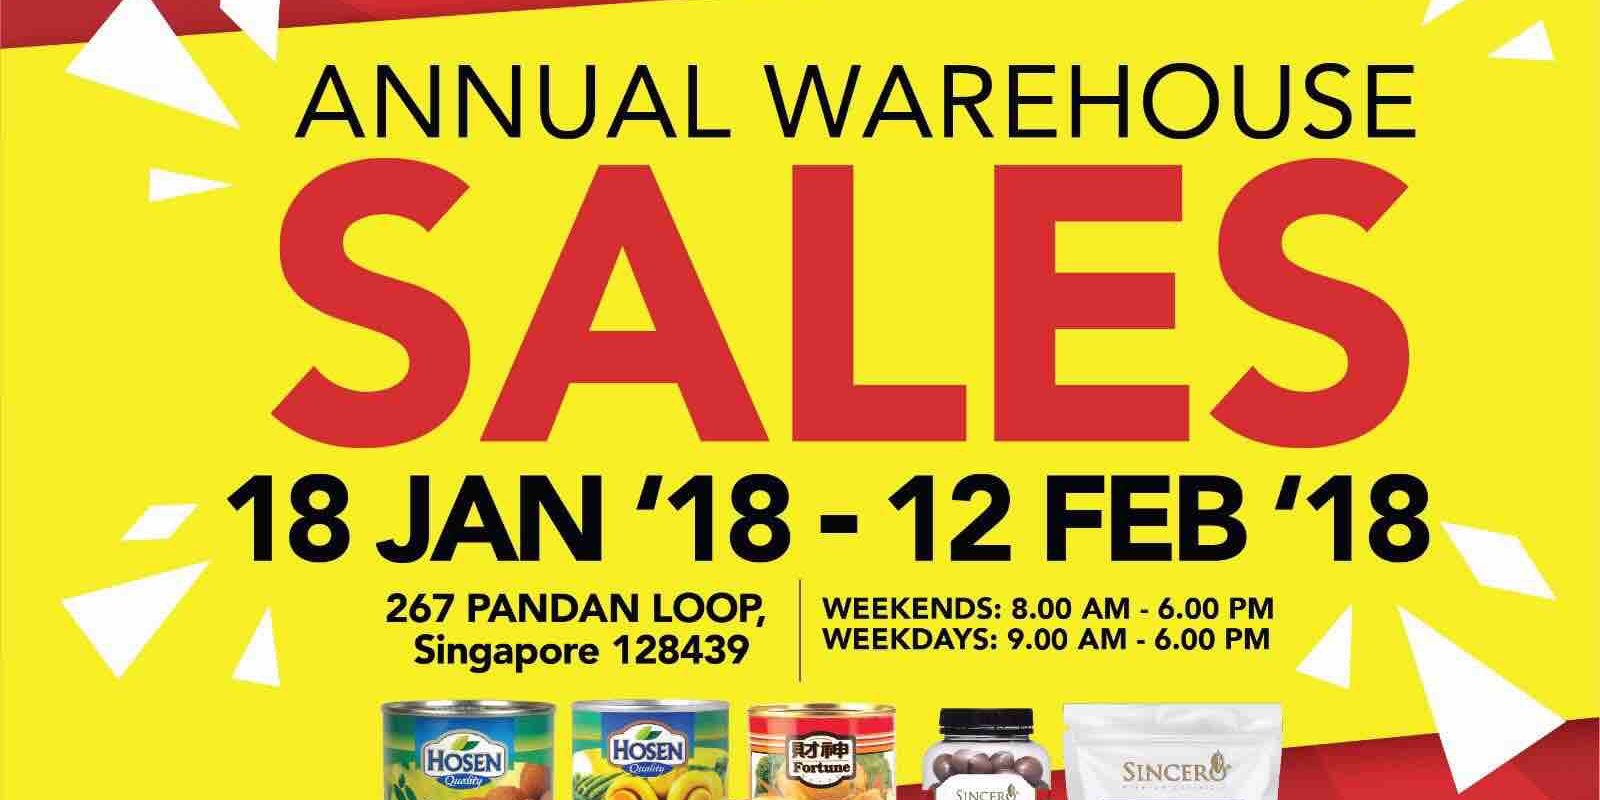 HOSEN Singapore Annual Warehouse Sales Promotion 18 Jan – 12 Feb 2018